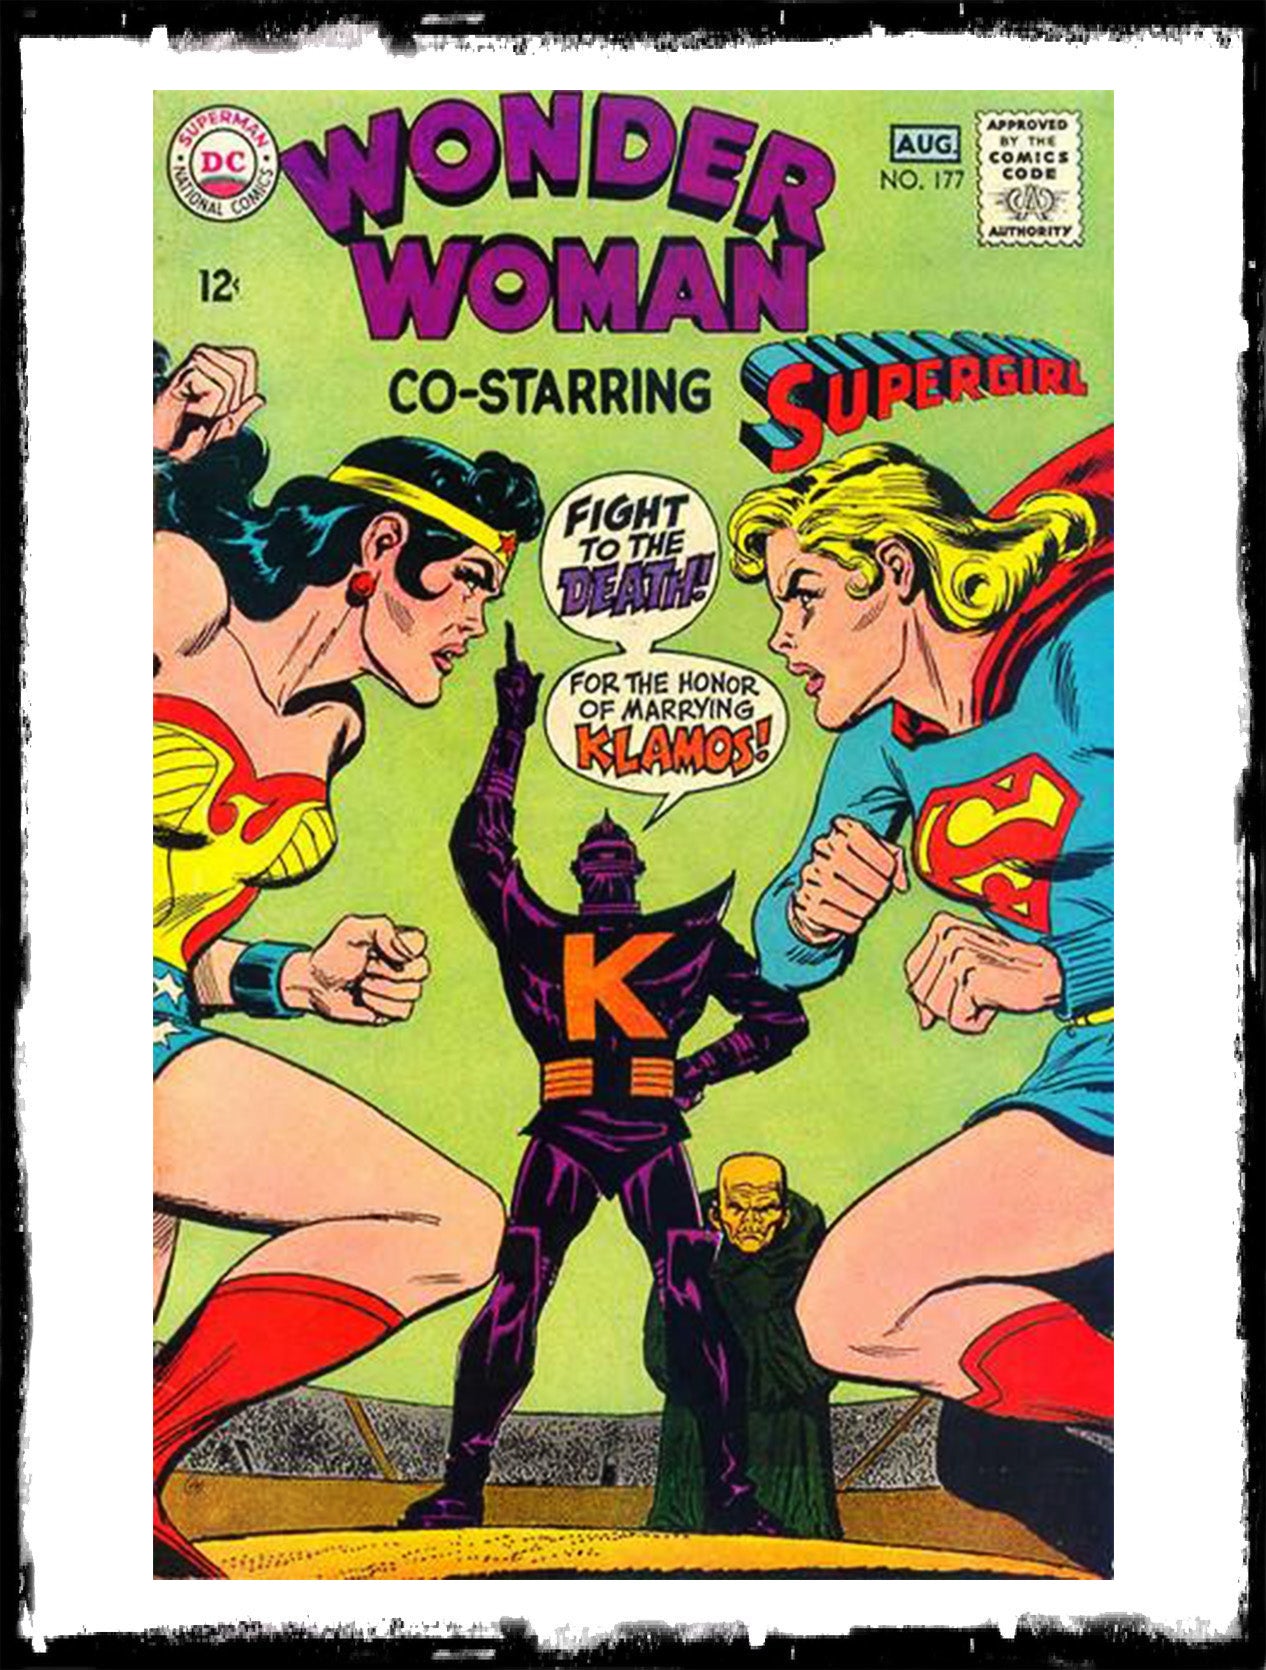 WONDER WOMAN - #177 WONDER WOMAN VS SUPER GIRL (1968 - FN/VF)